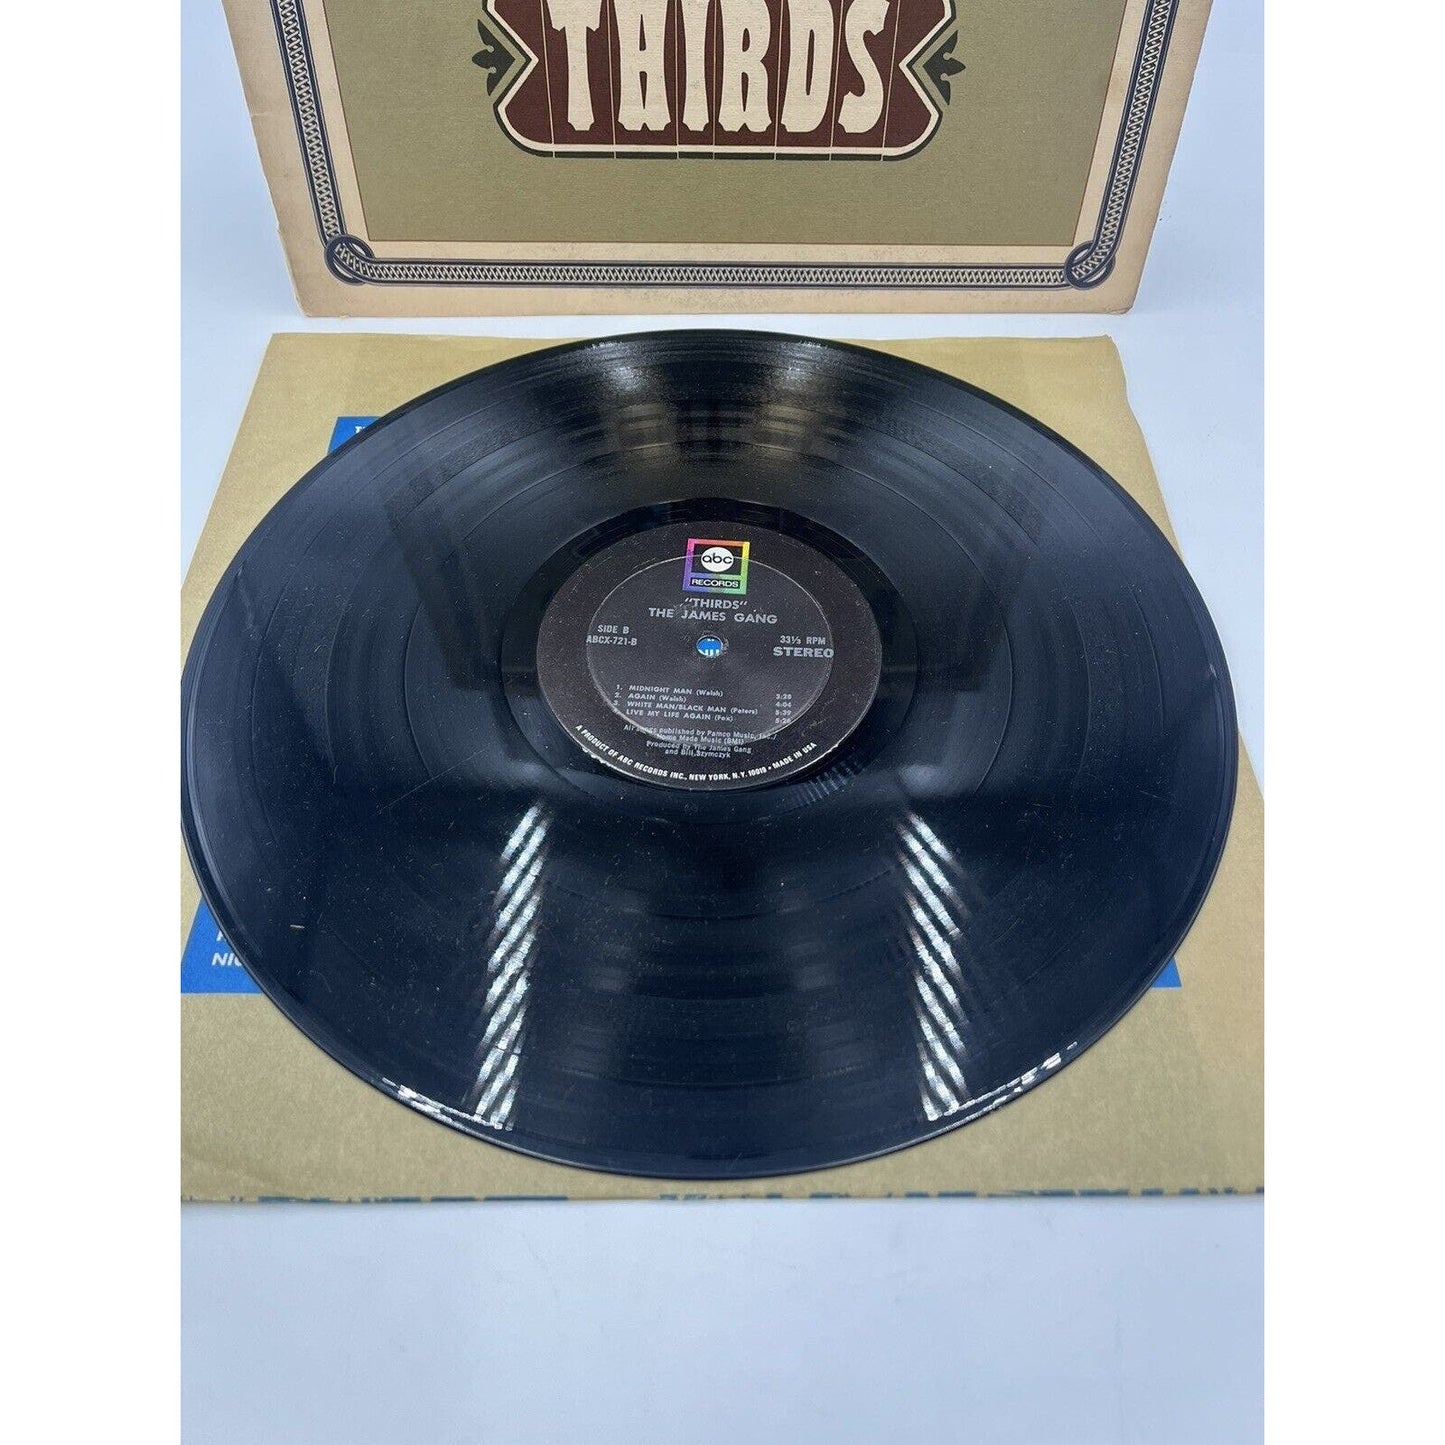 THE JAMES GANG THIRDS VINYL RECORD ALBUM LP ABCX-721 VG/VG